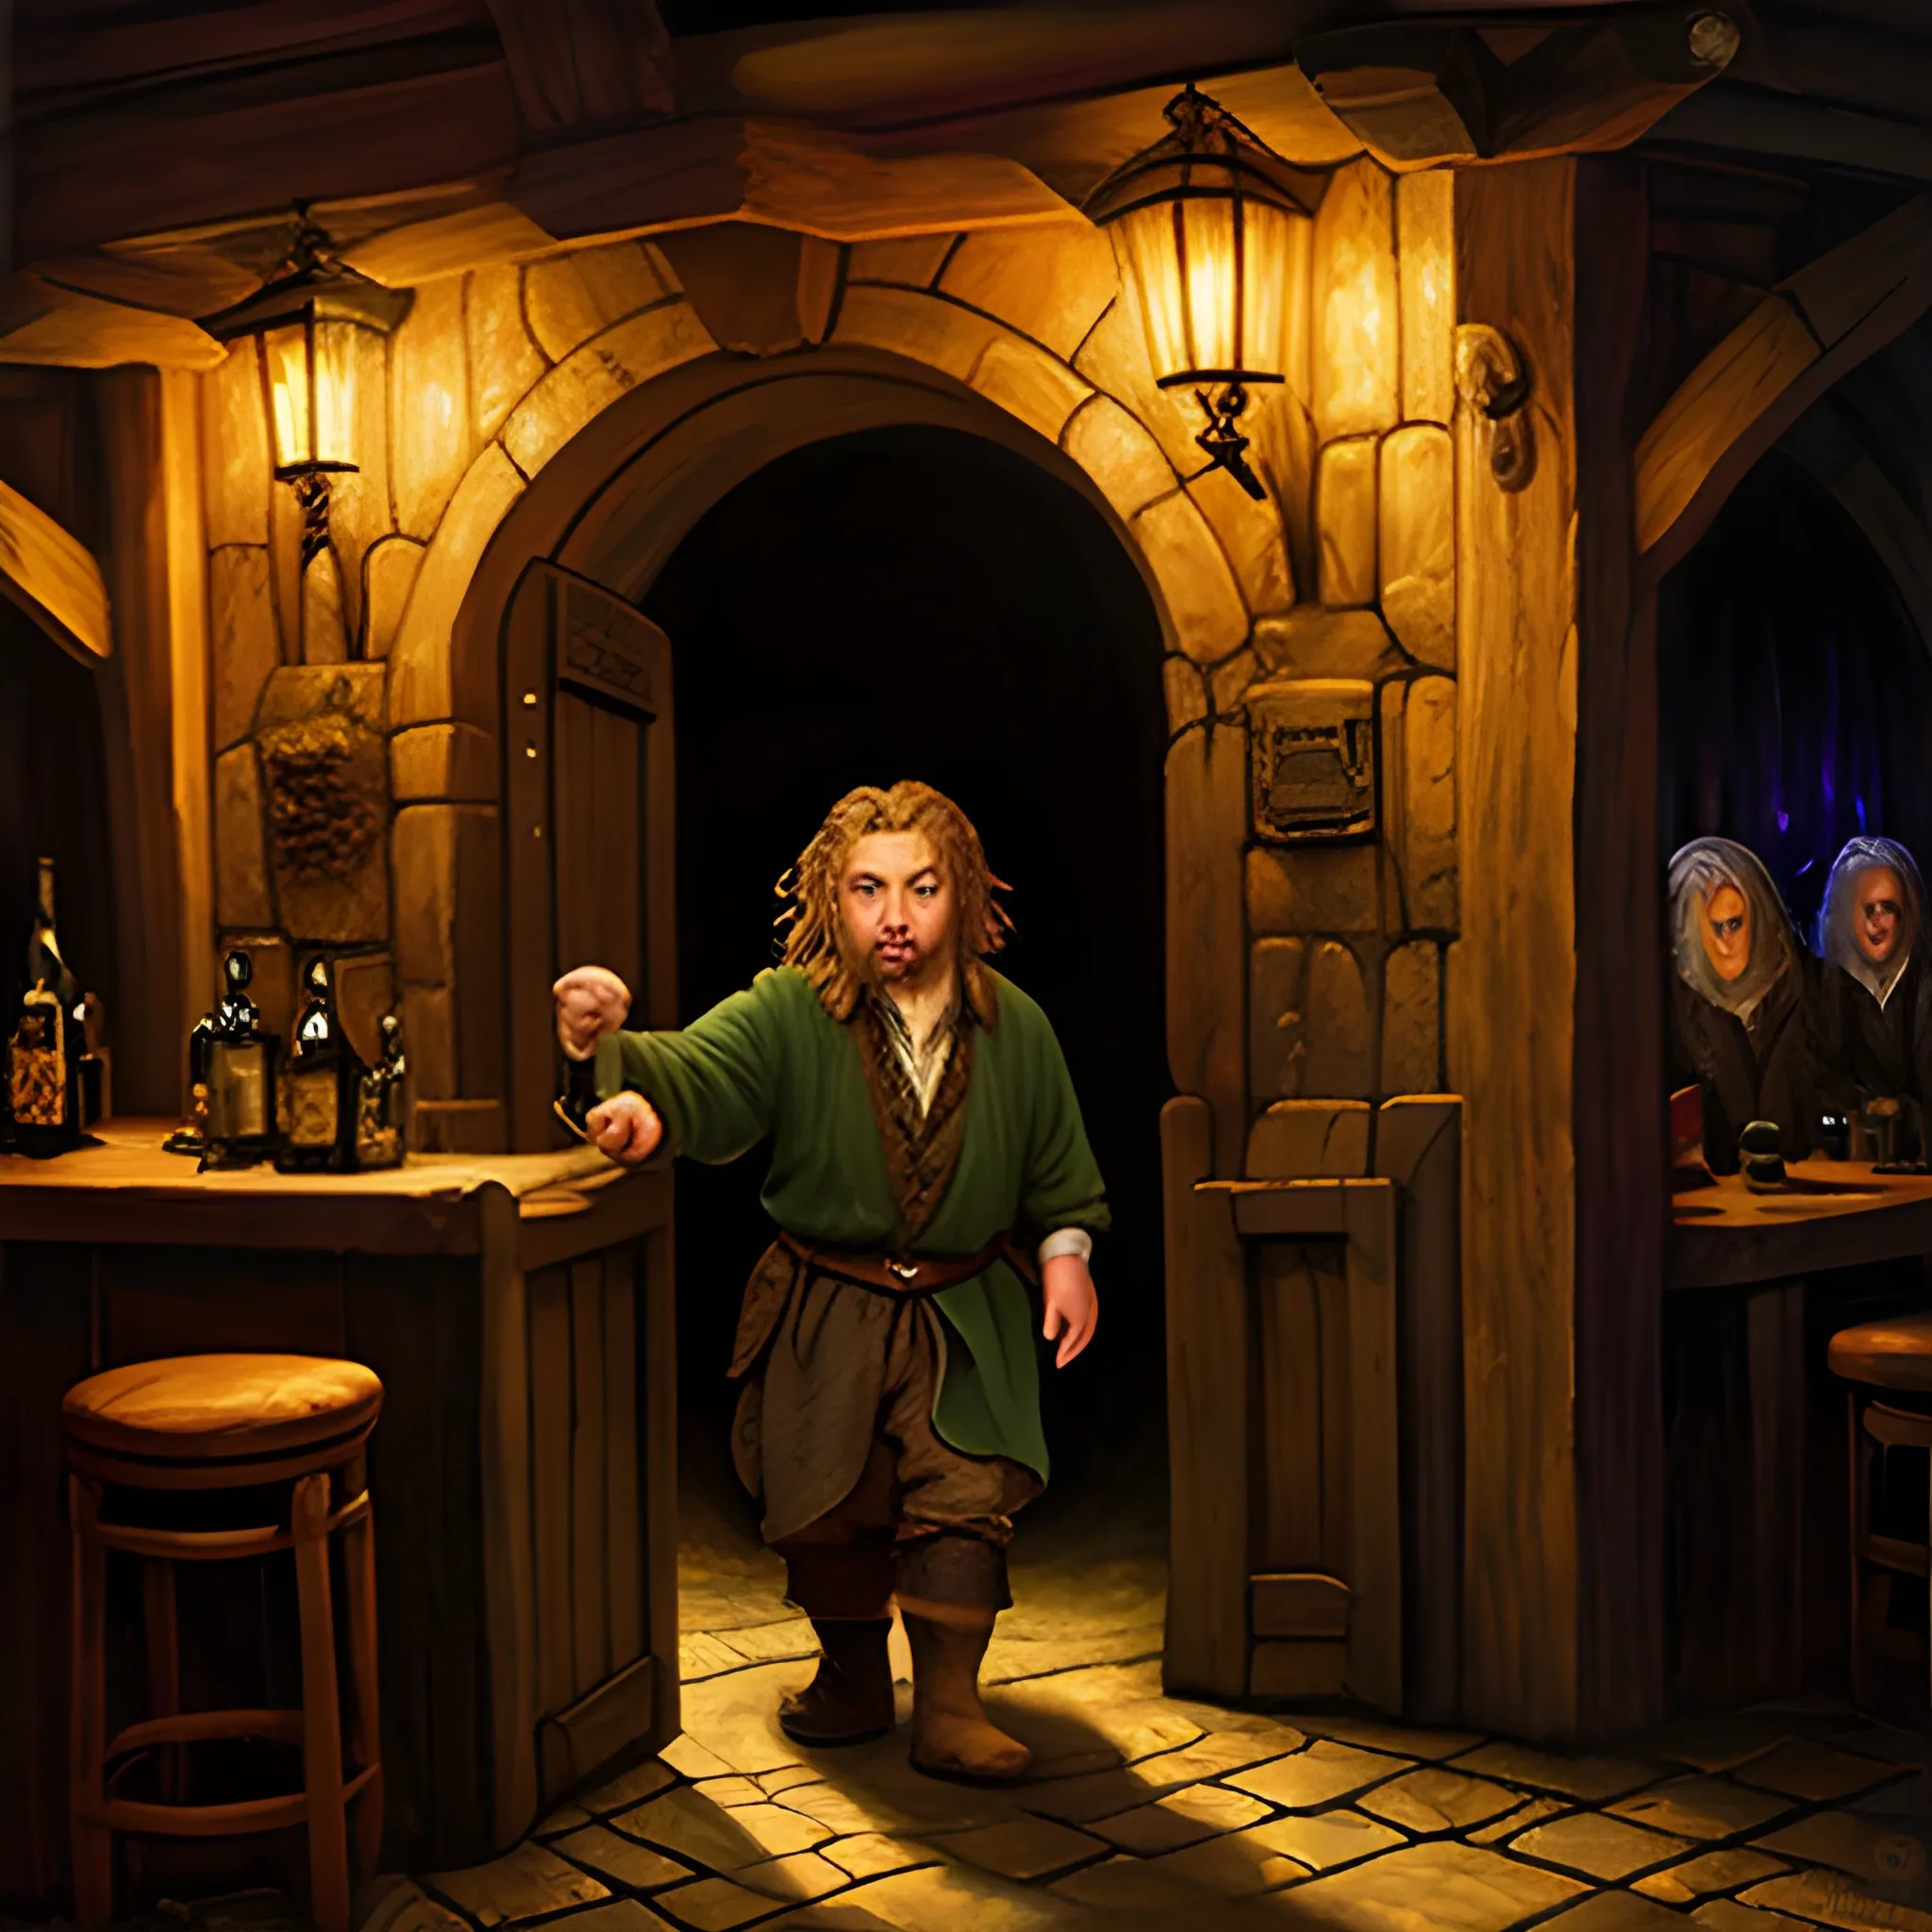 drunken hobbit walking inside the tavern at night, middle earth, Oil Painting